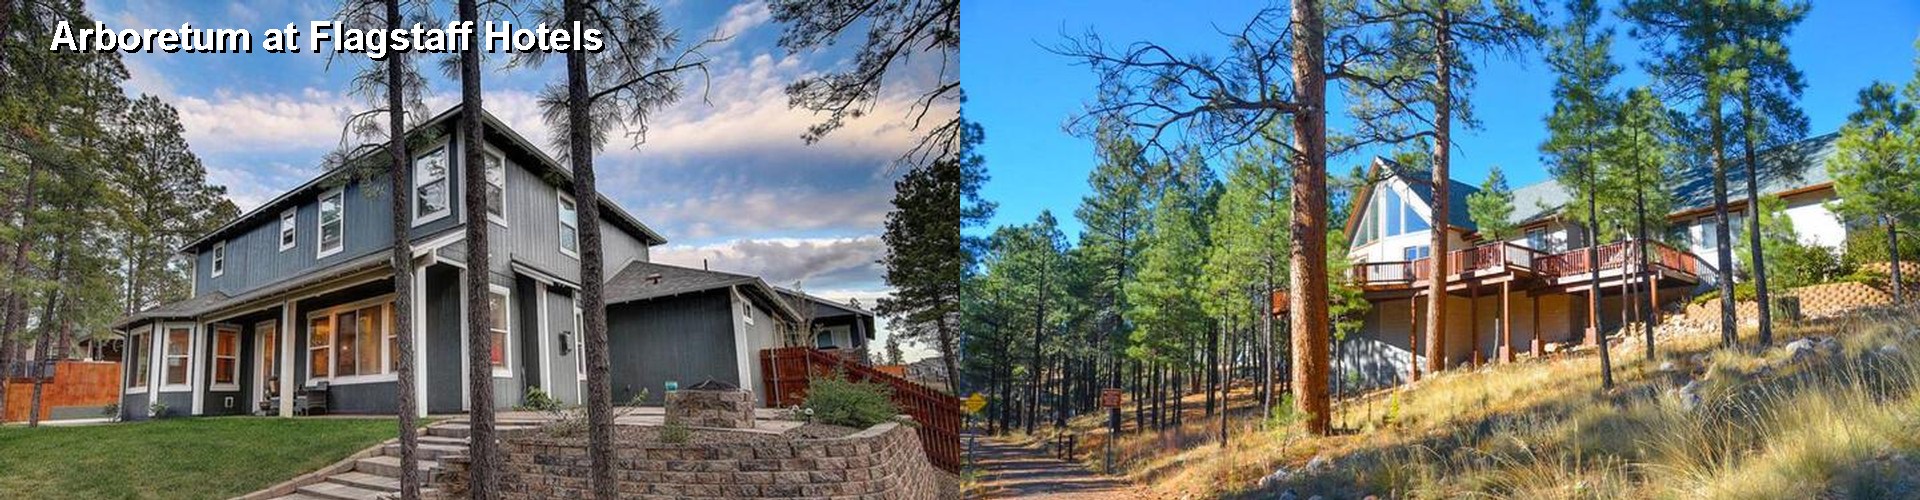 5 Best Hotels near Arboretum at Flagstaff